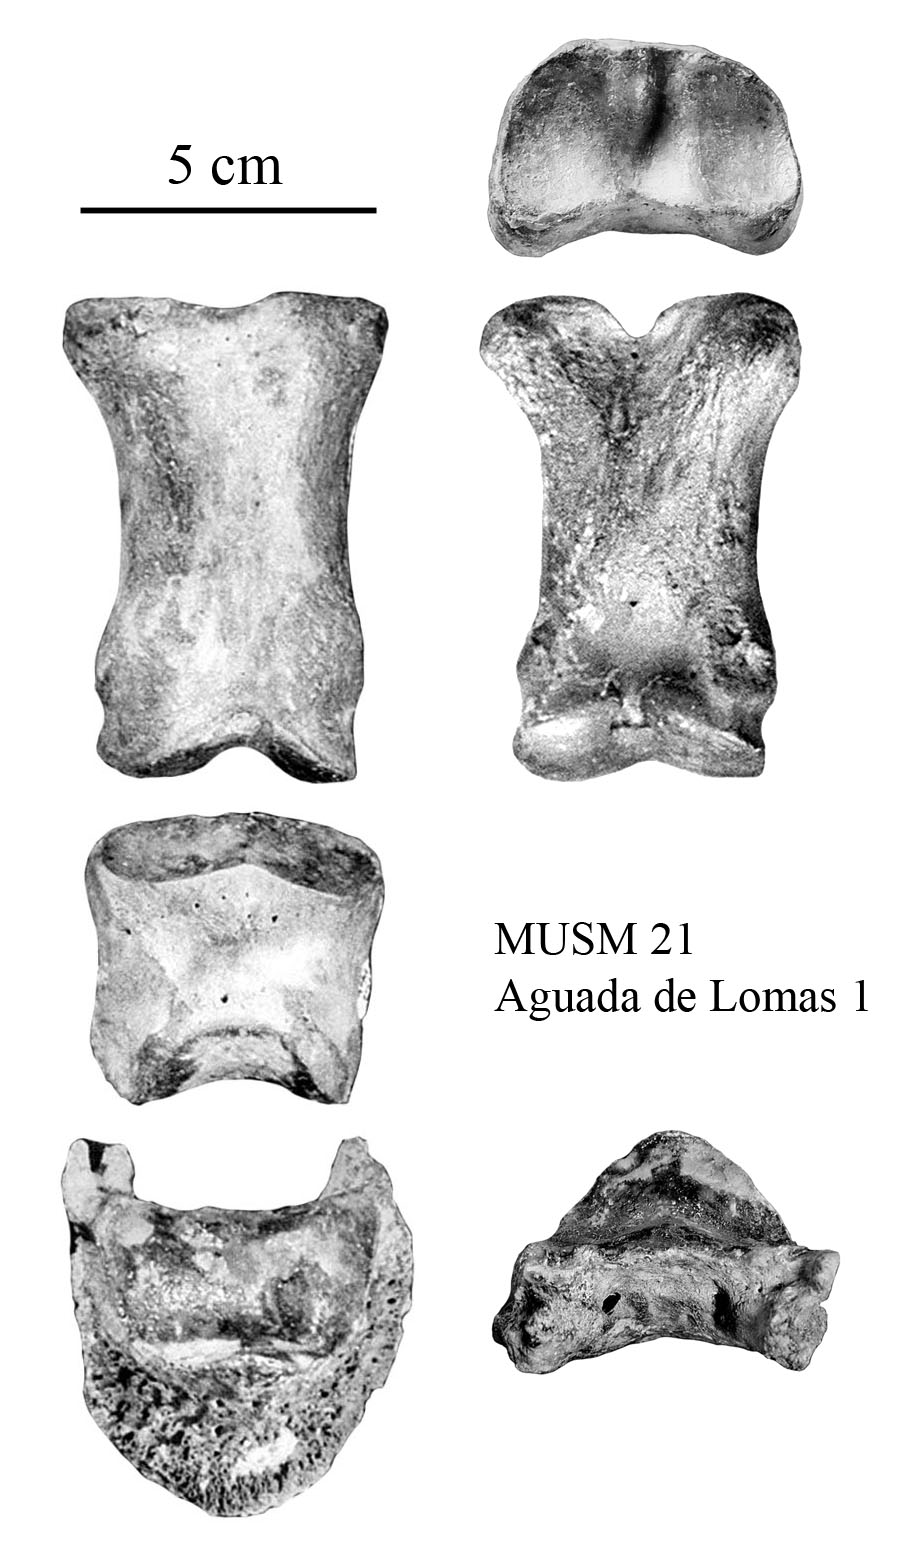 MUSM 21, Anterior phalanges